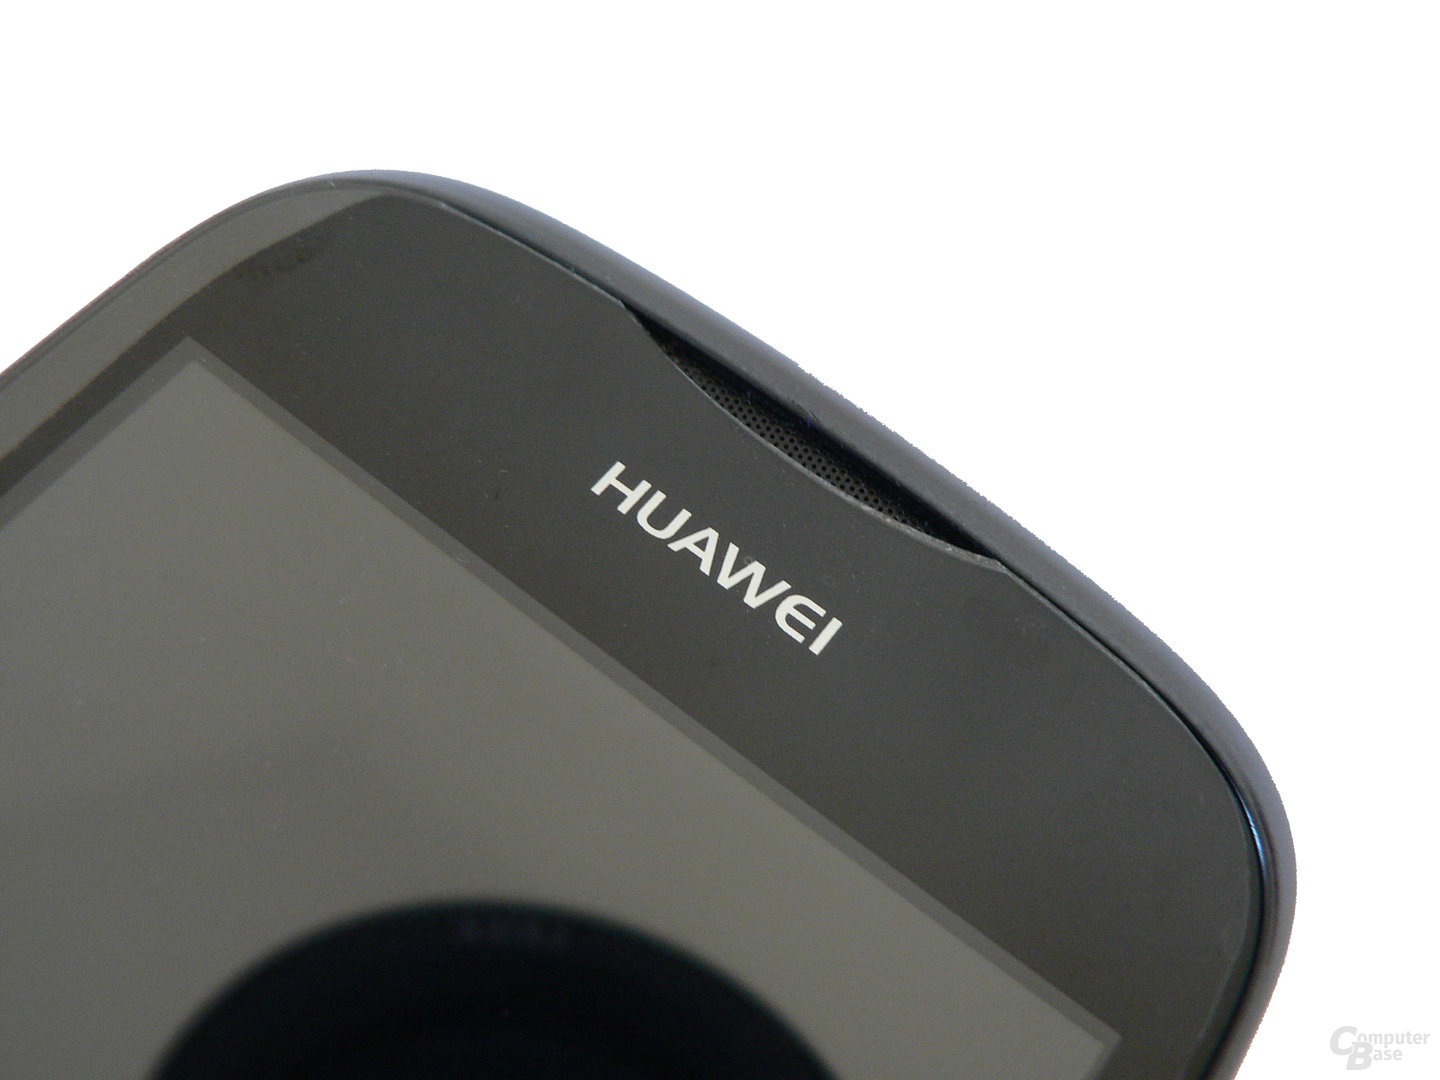 Huawei Ascend Y210 Pro